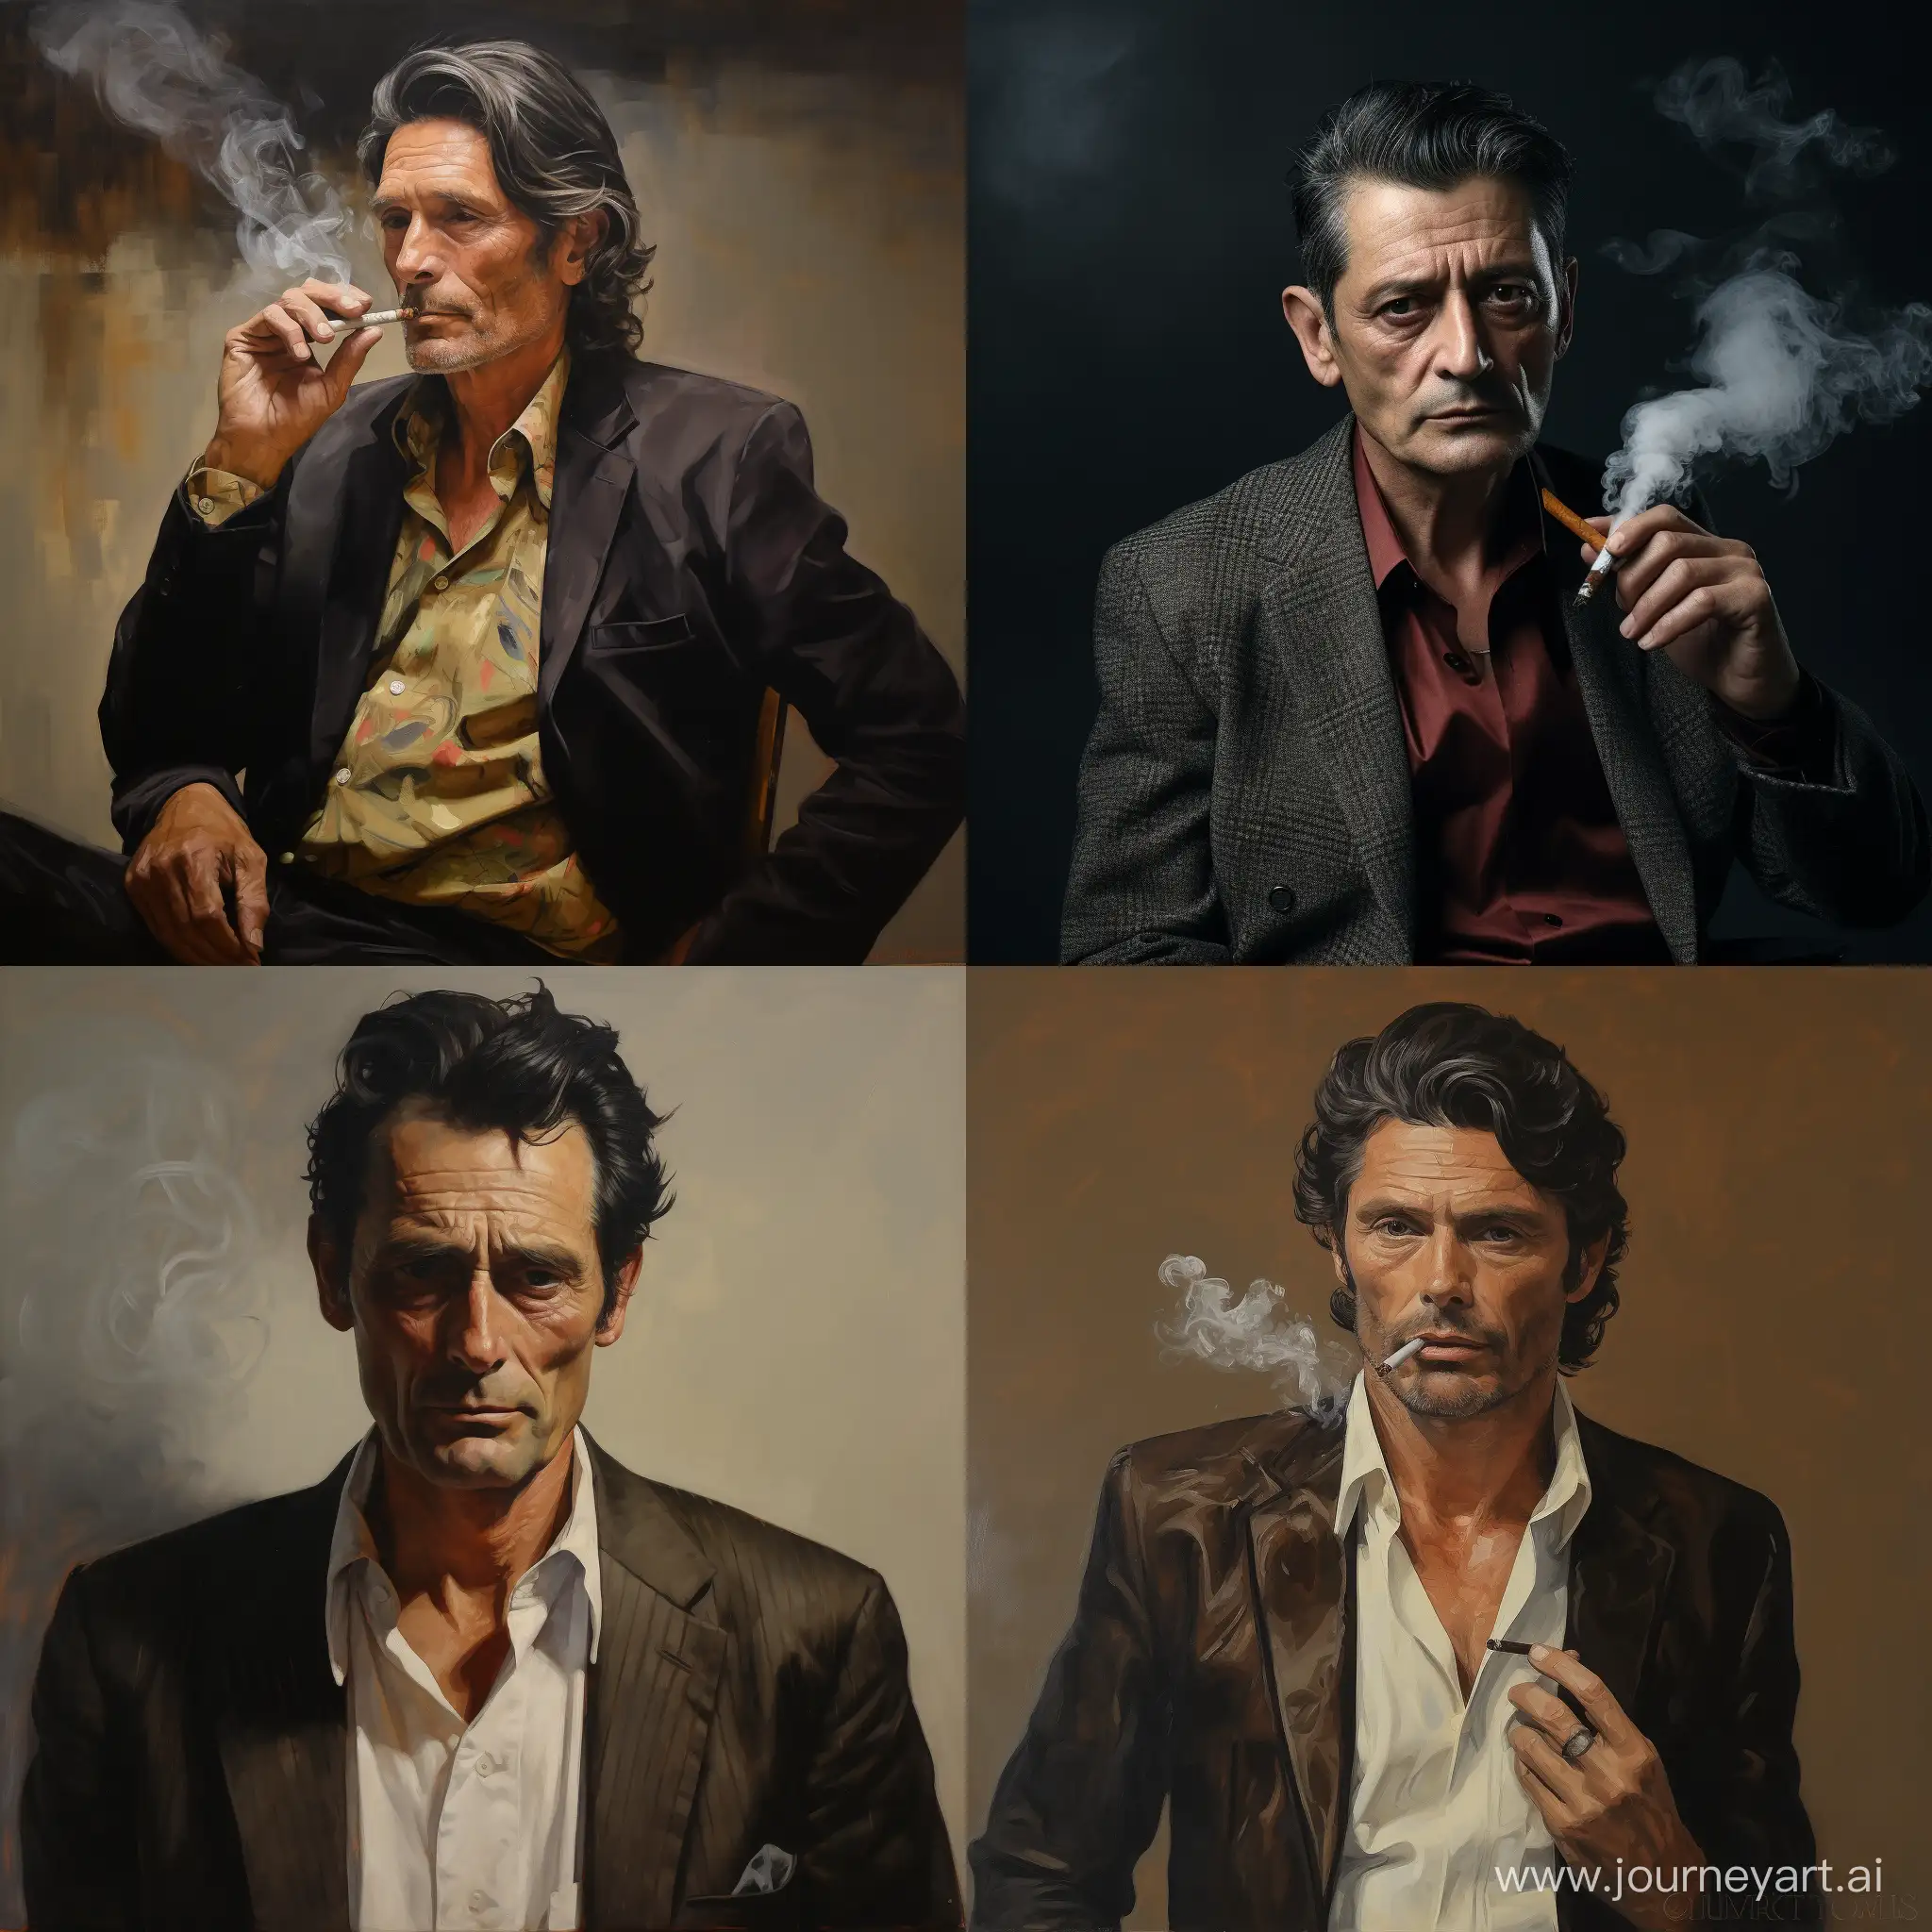 Mature-Man-Smoking-in-Stylish-Jacket